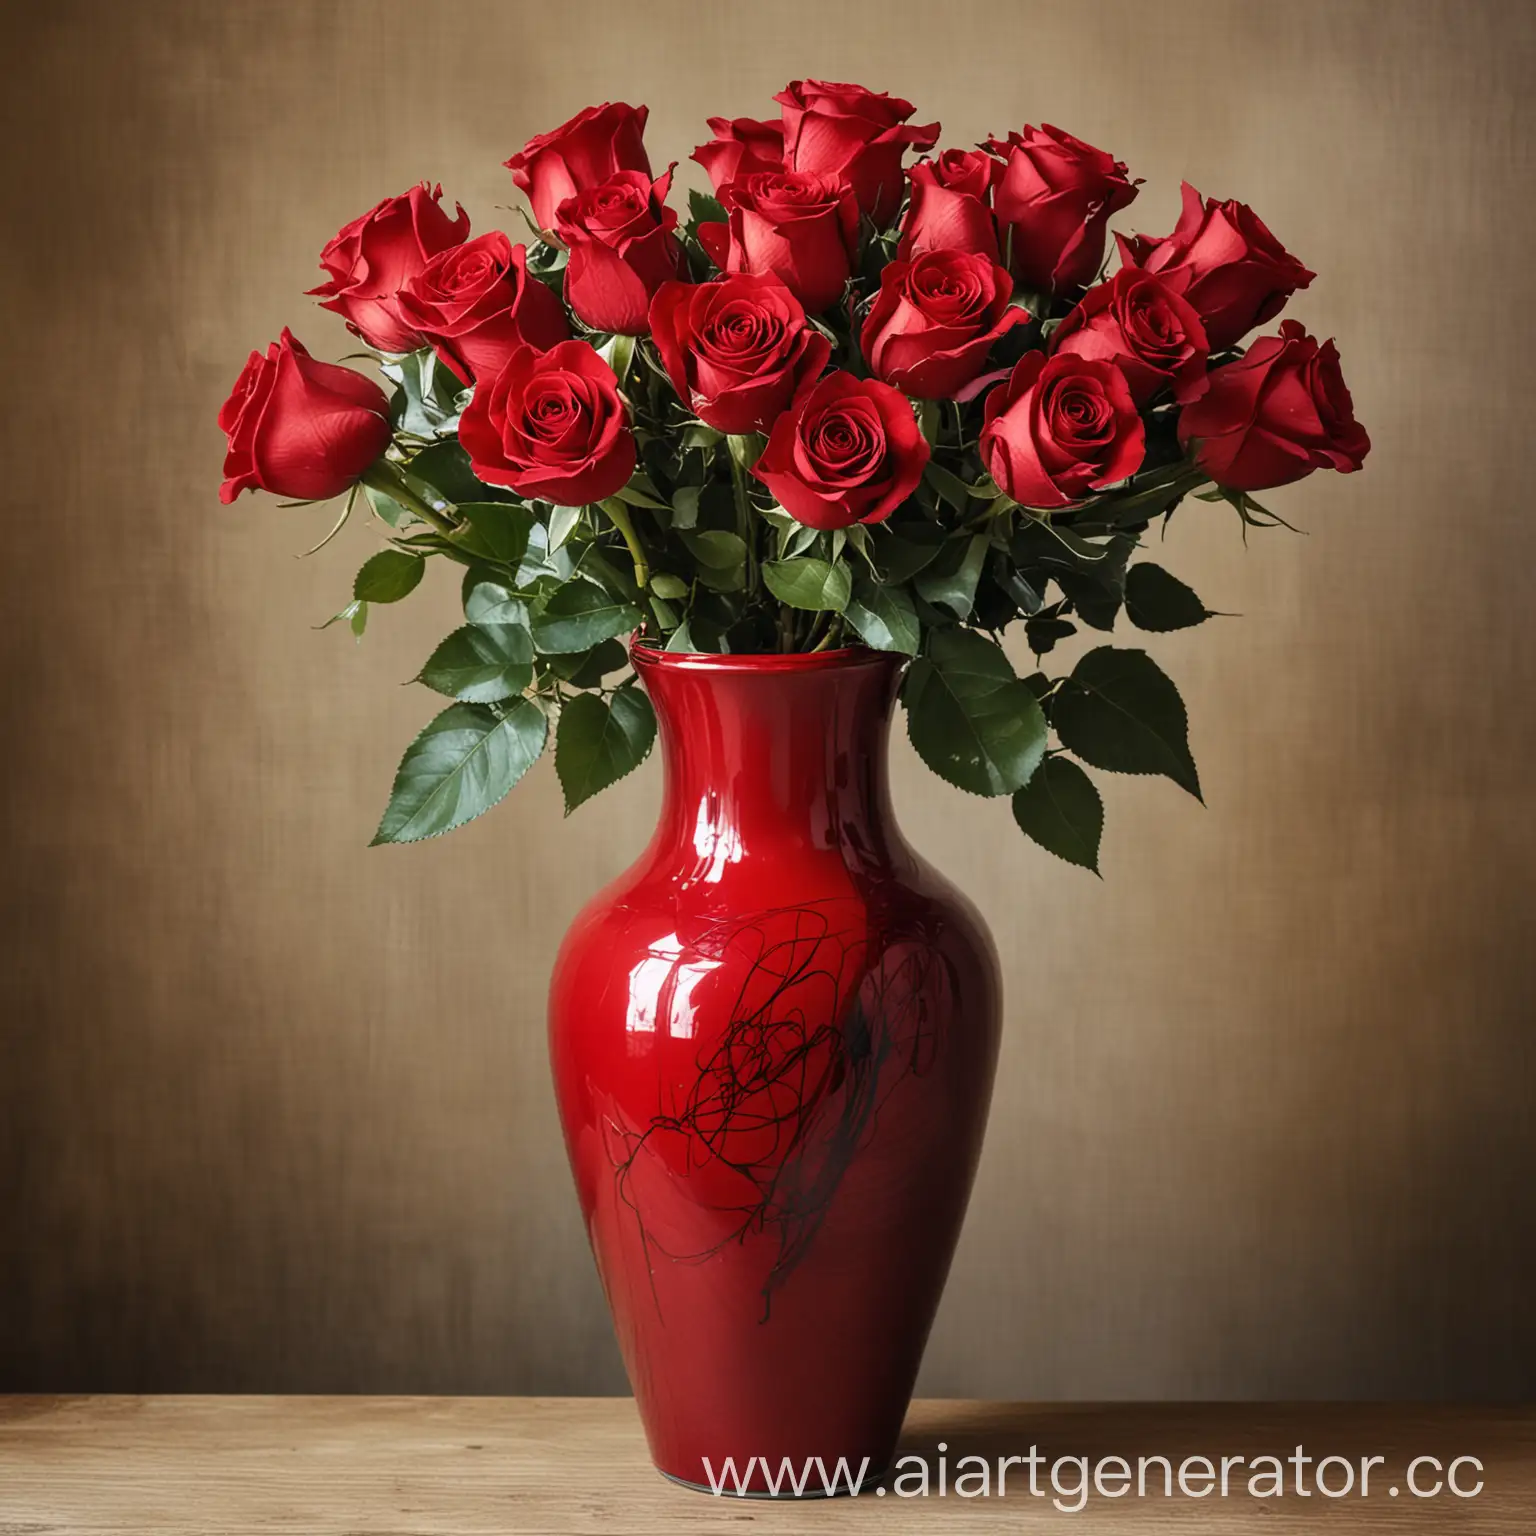 Vibrant-Red-Roses-in-a-Red-Vase-Expressive-Floral-Artwork